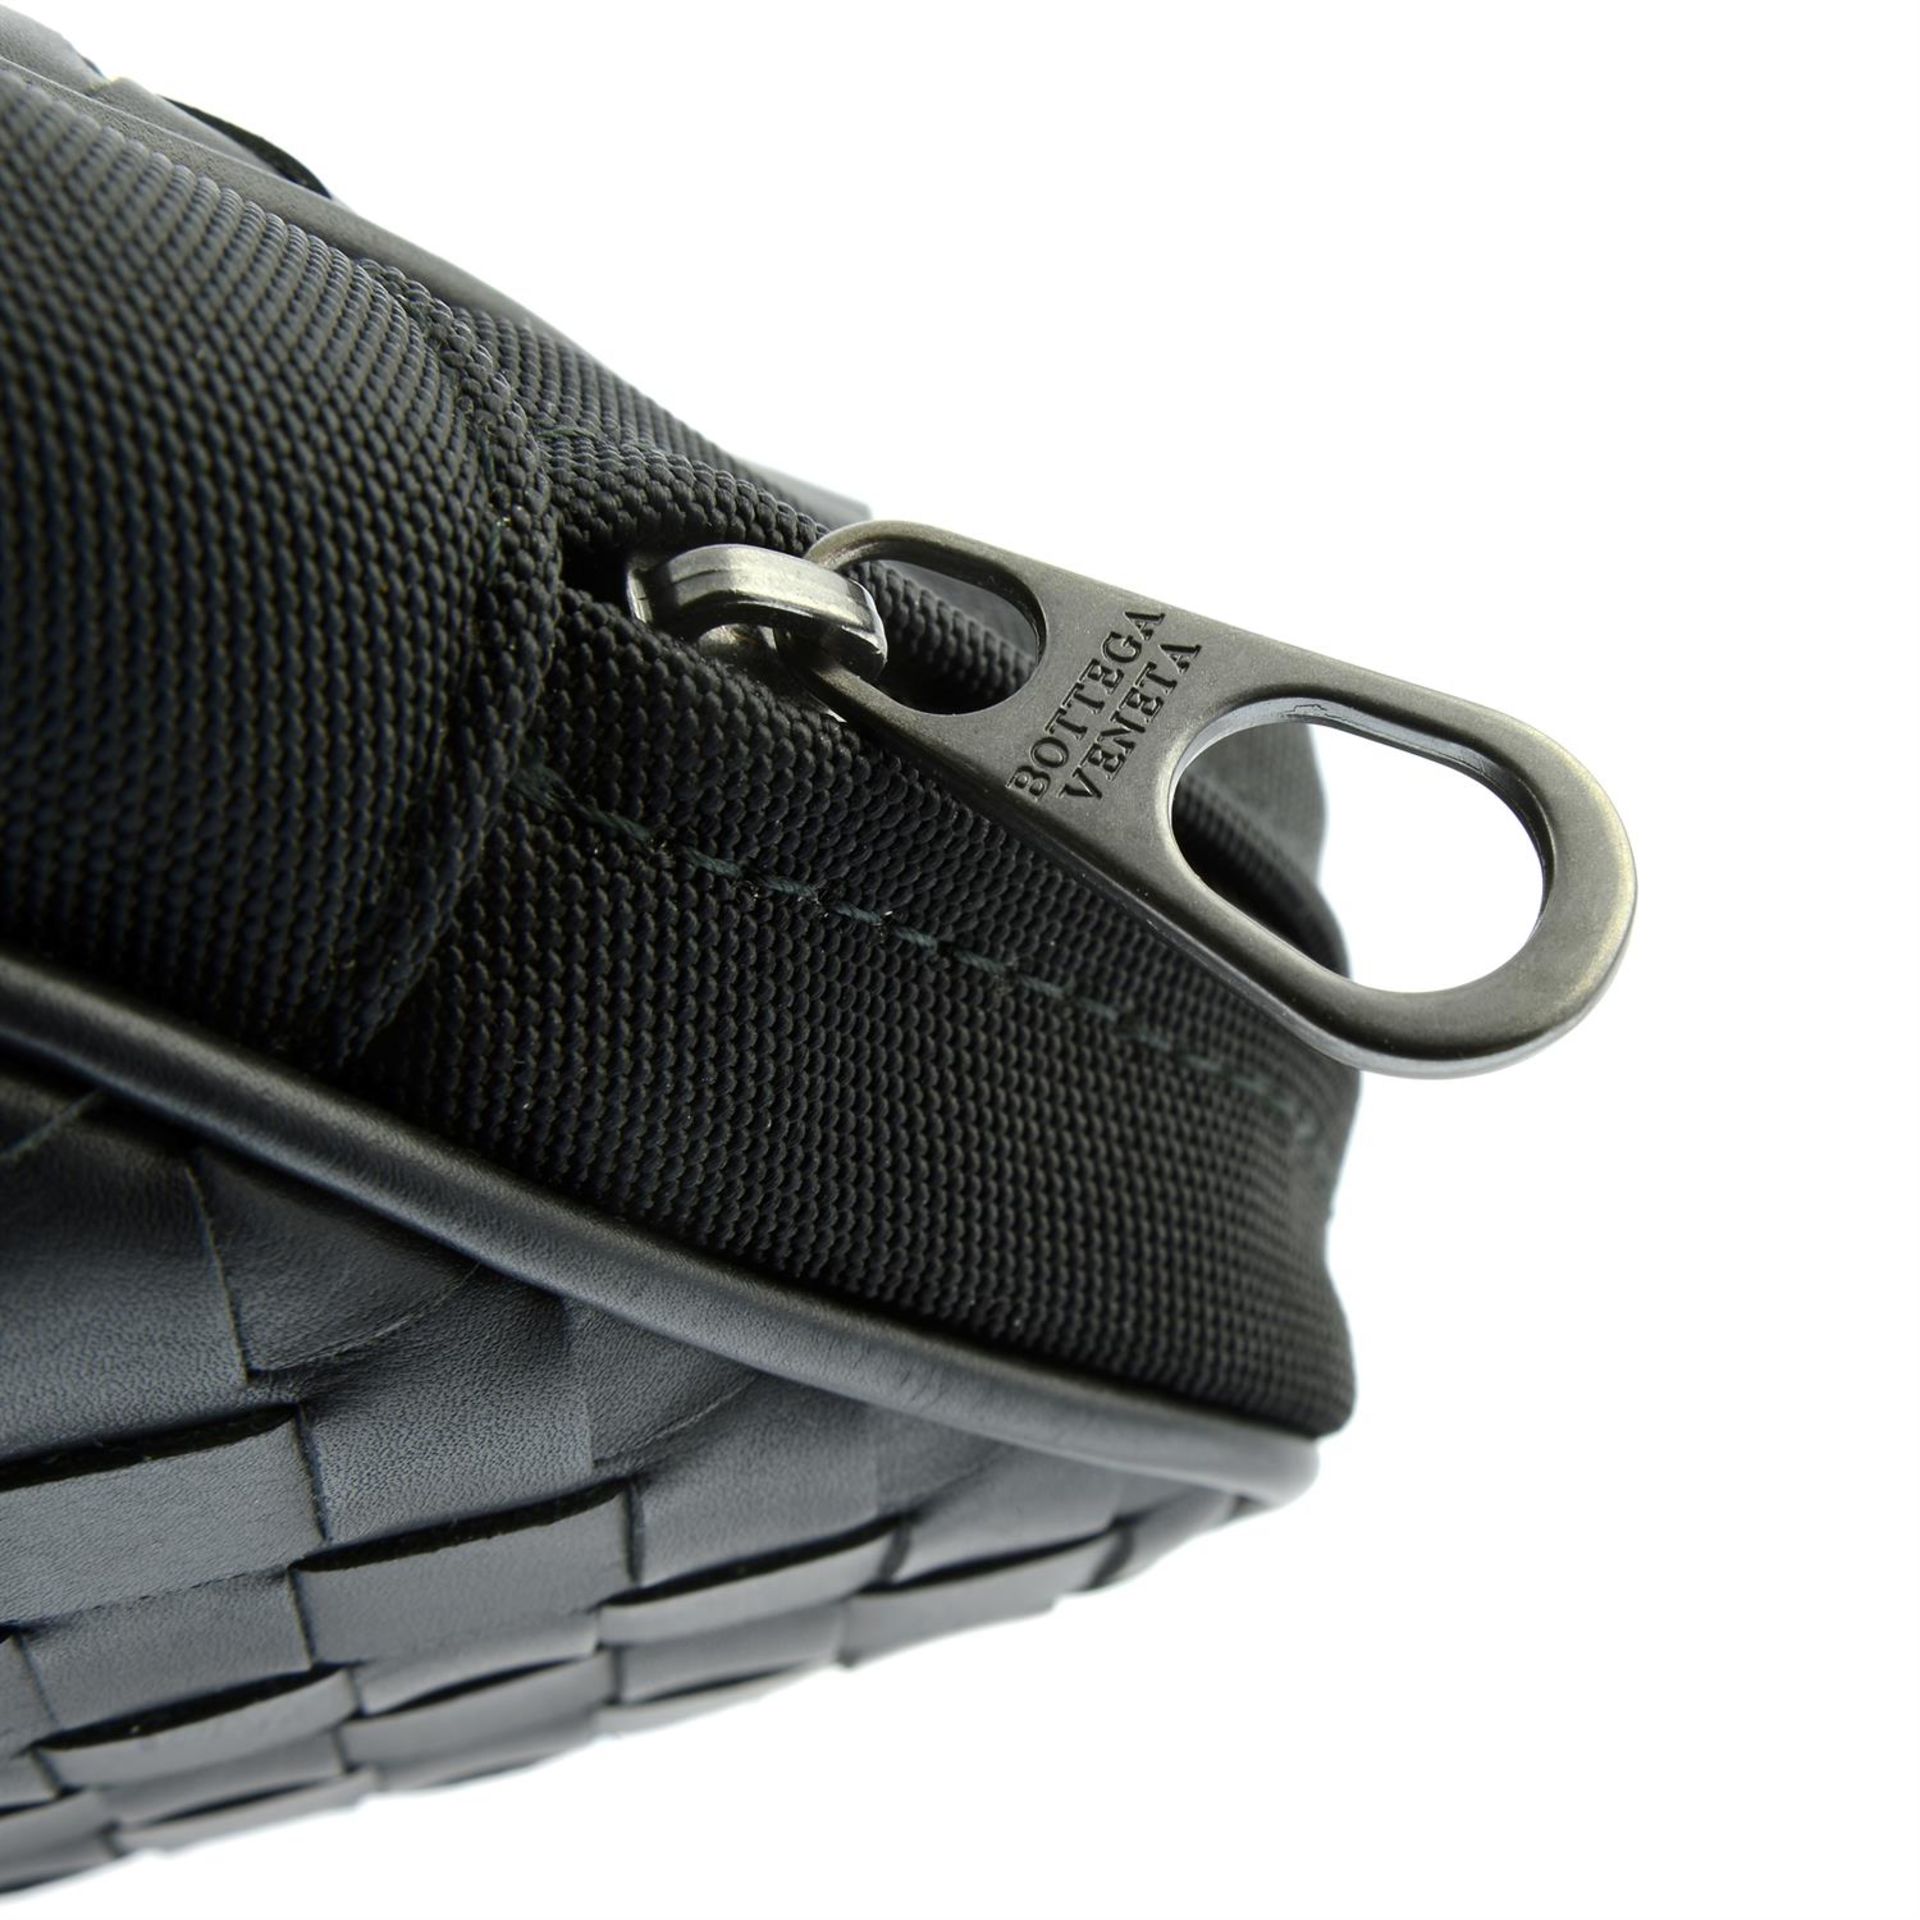 BOTTEGA VENETA - a black leather pouch. - Image 4 of 4